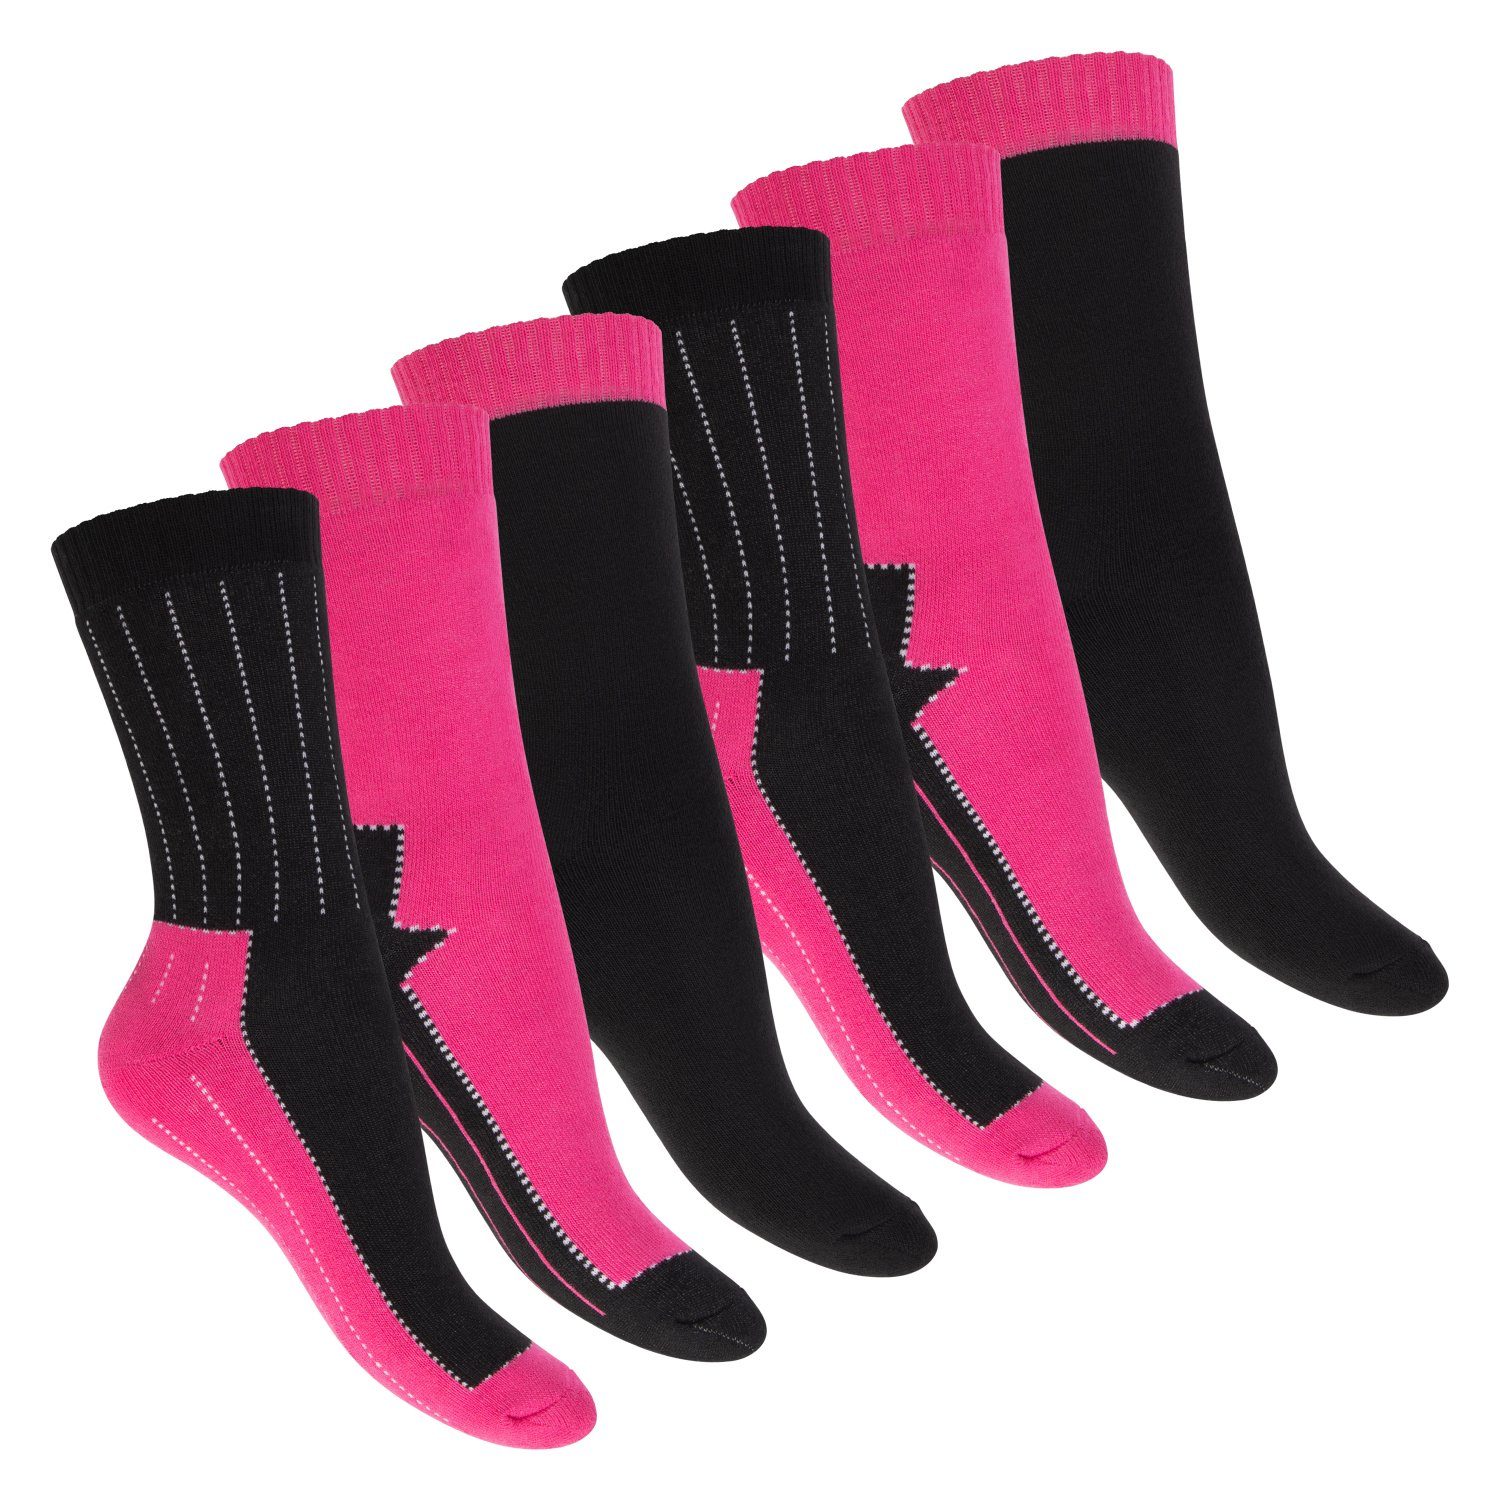 Footstar Thermosocken Damen Wintersocken (6 Paar) - Warme Vollfrottee Thermo Socken Schwarz / Pink